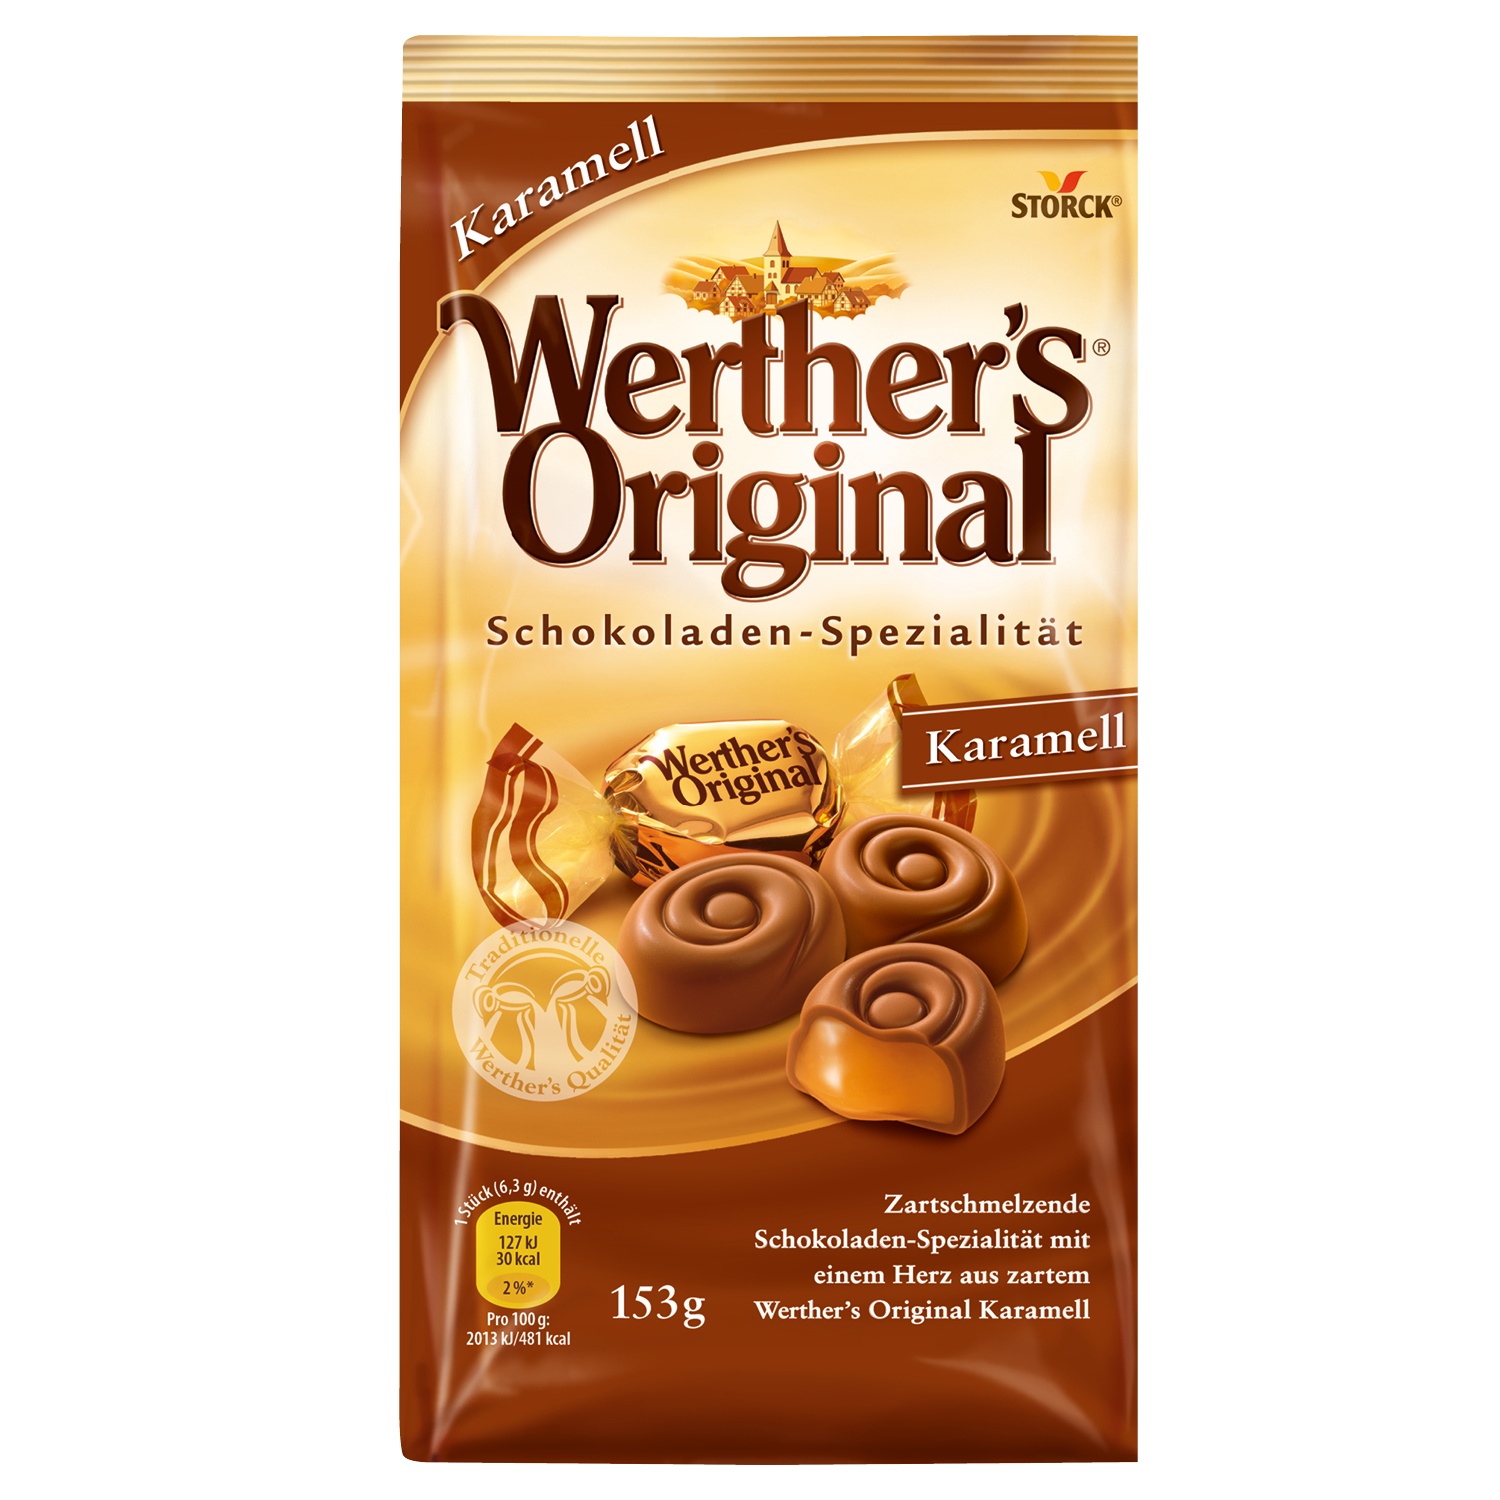 WERTHER'S ORIGINAL Schokoladen-Spezialität Karamell 153 g